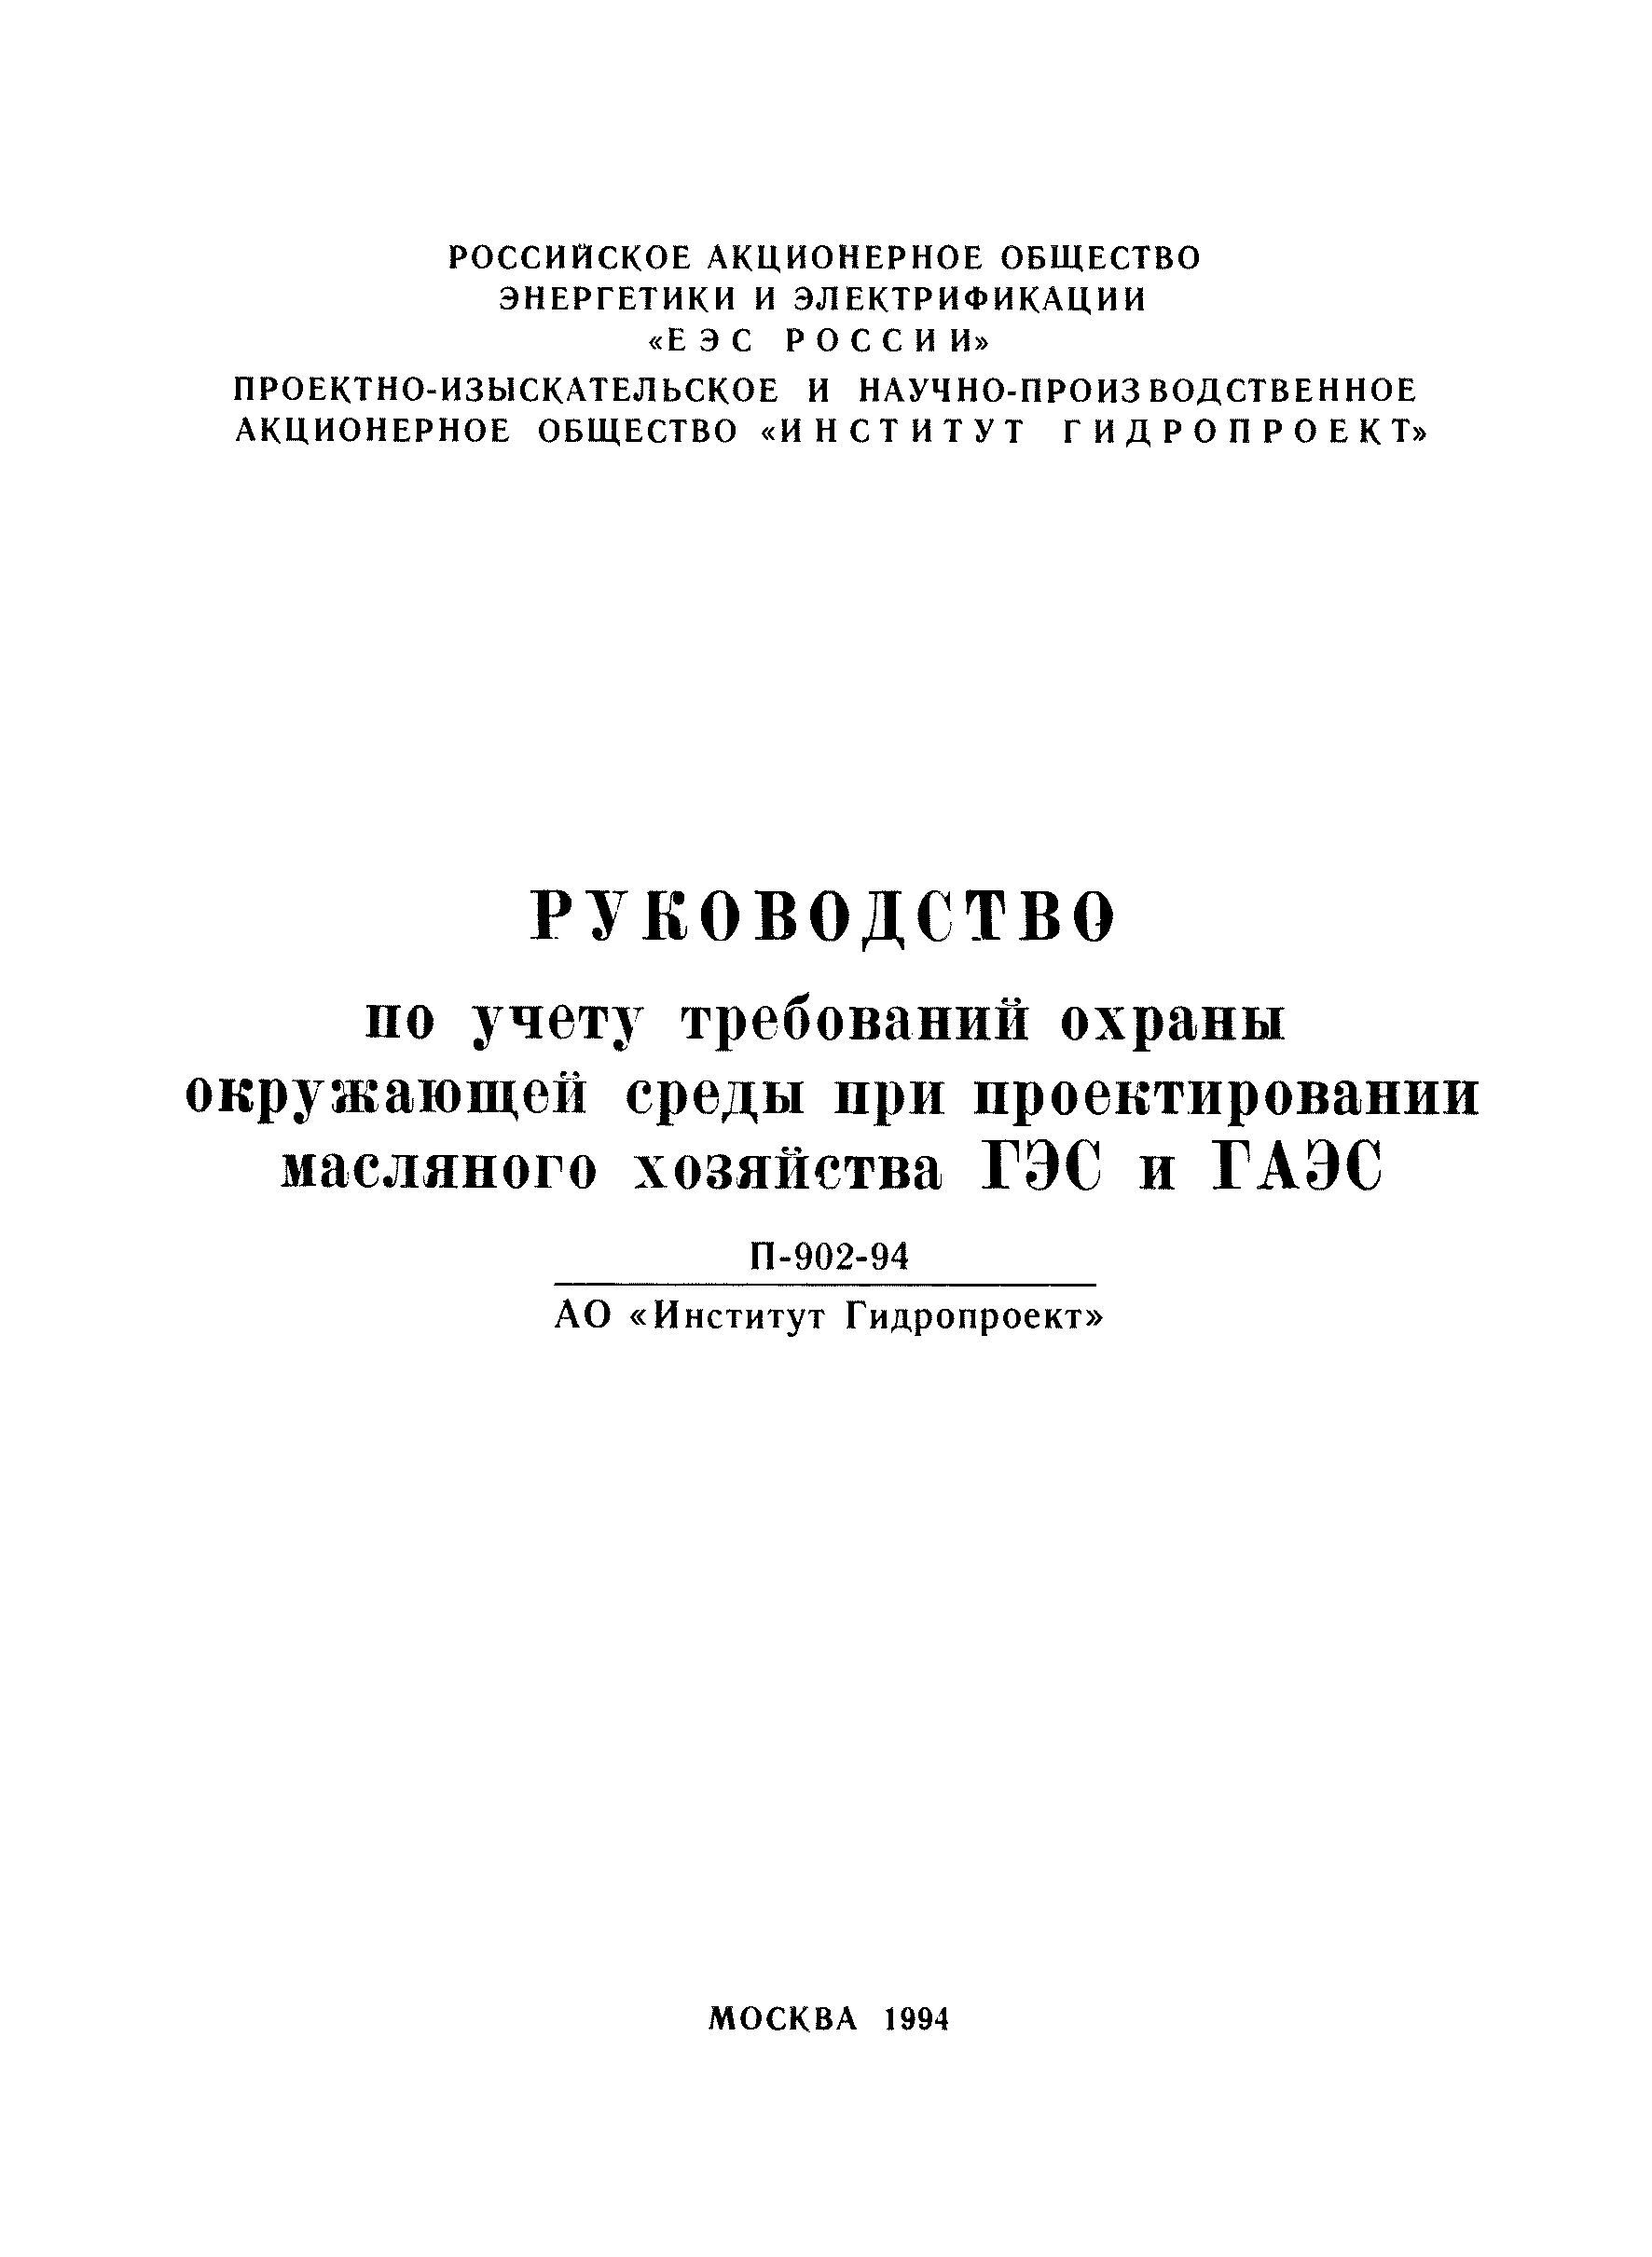 П 902-94/АО "Институт Гидропроект"